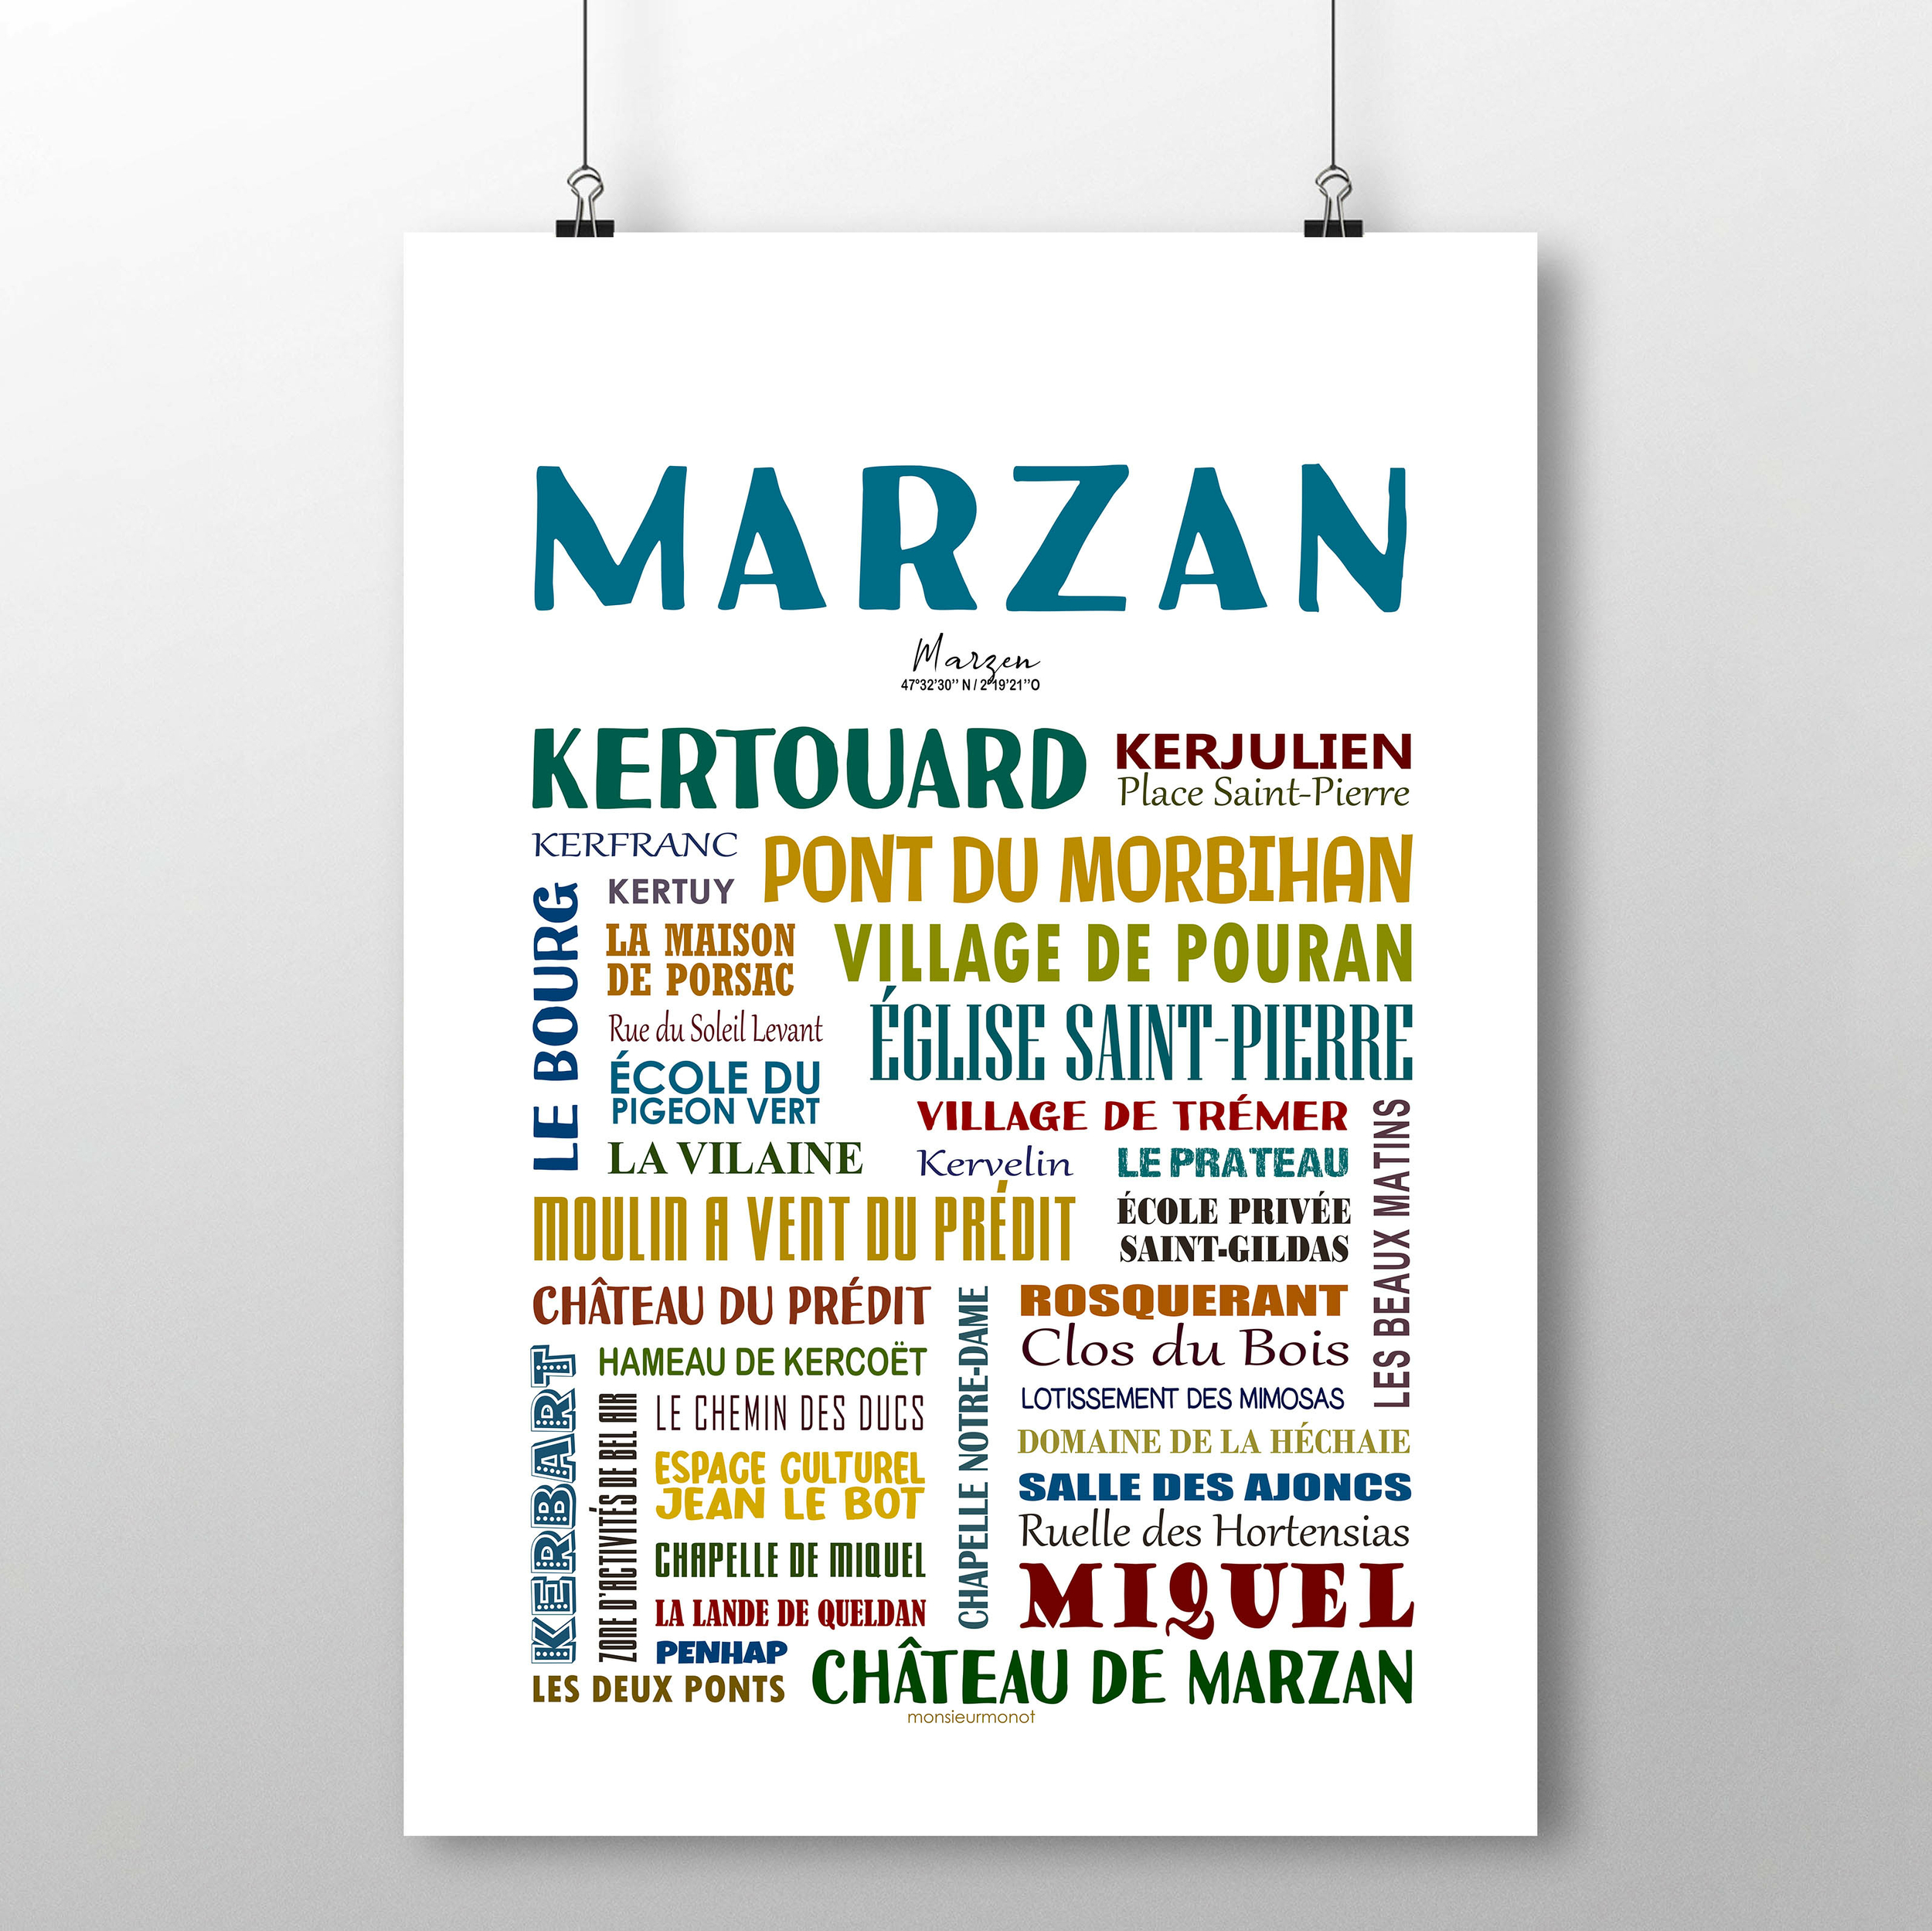 Marzan 2